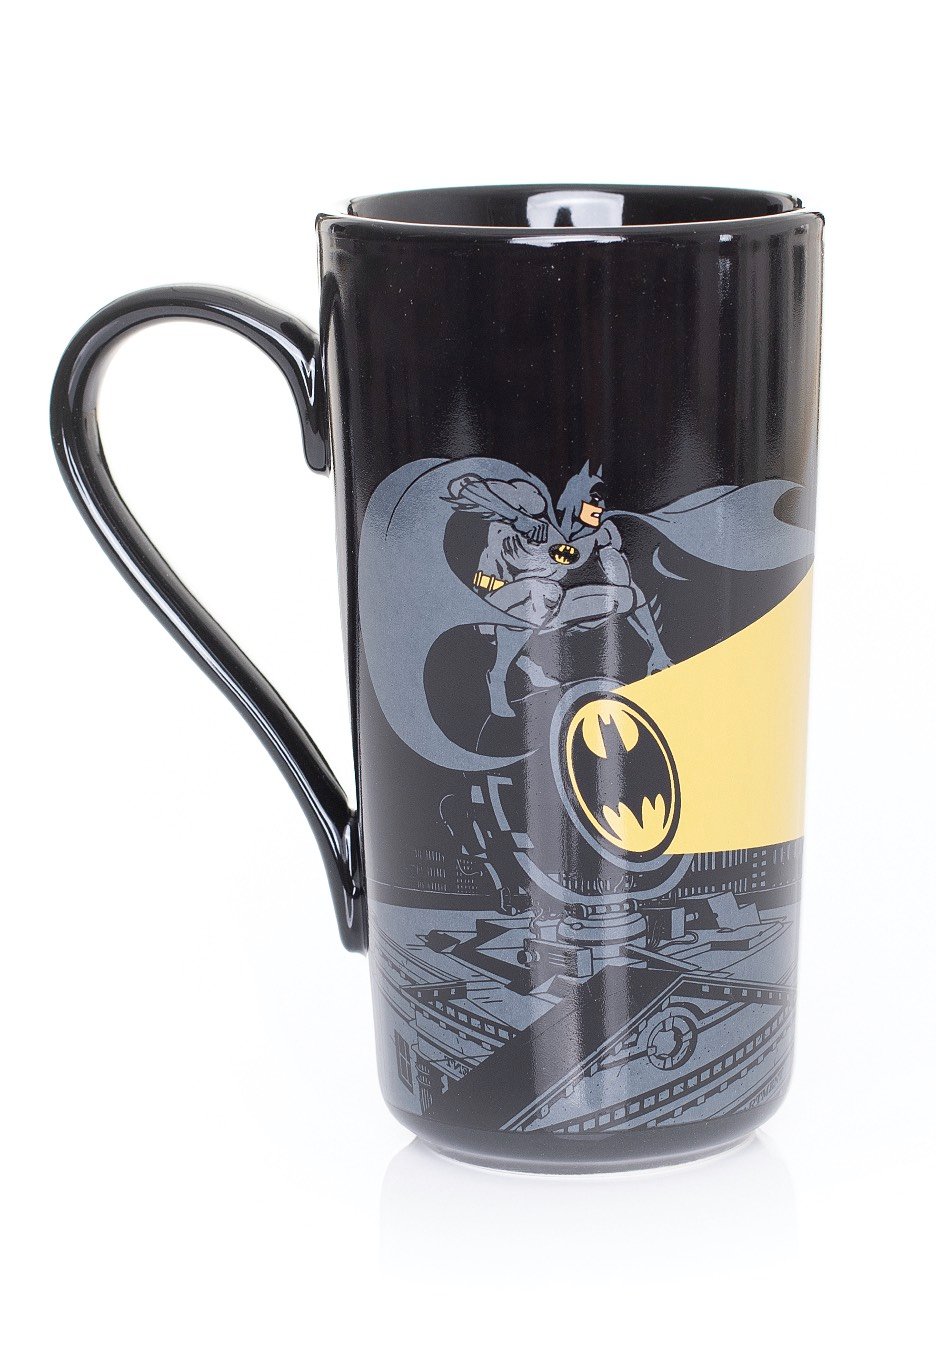 Batman - Bring Coffee Maxi - Mug | Neutral-Image